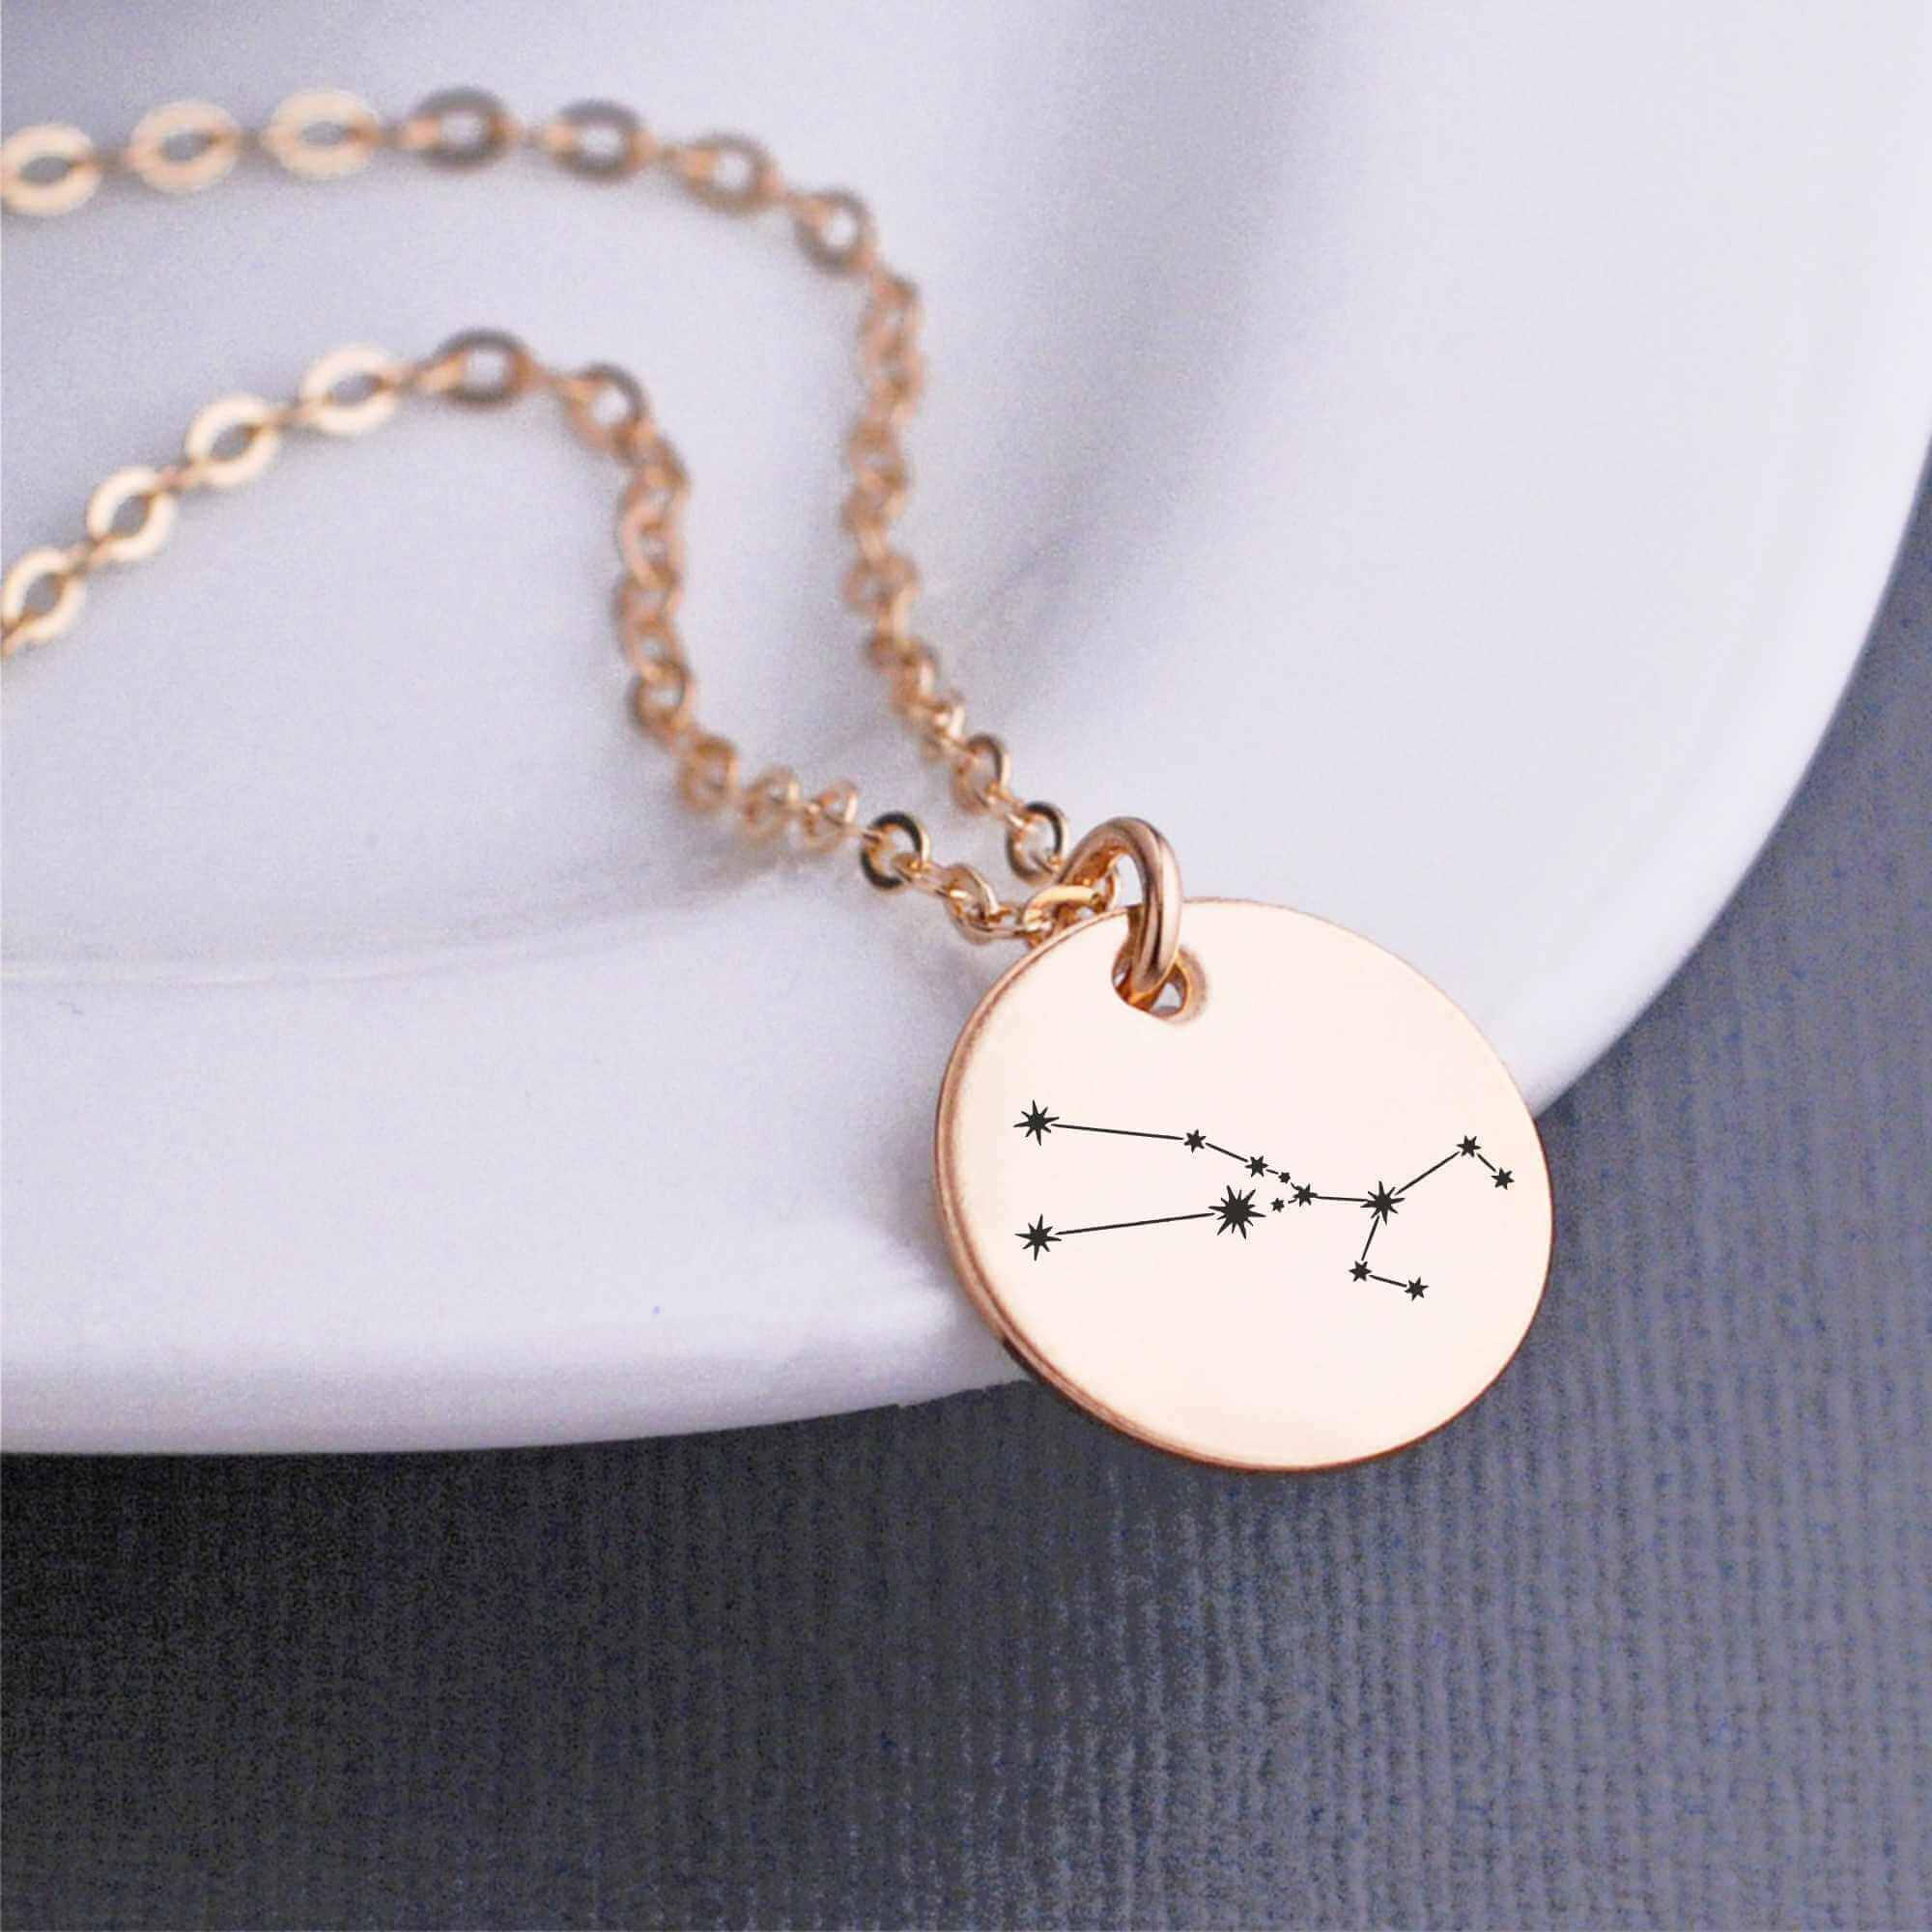 Custom Constellation Necklace - 15mm charm